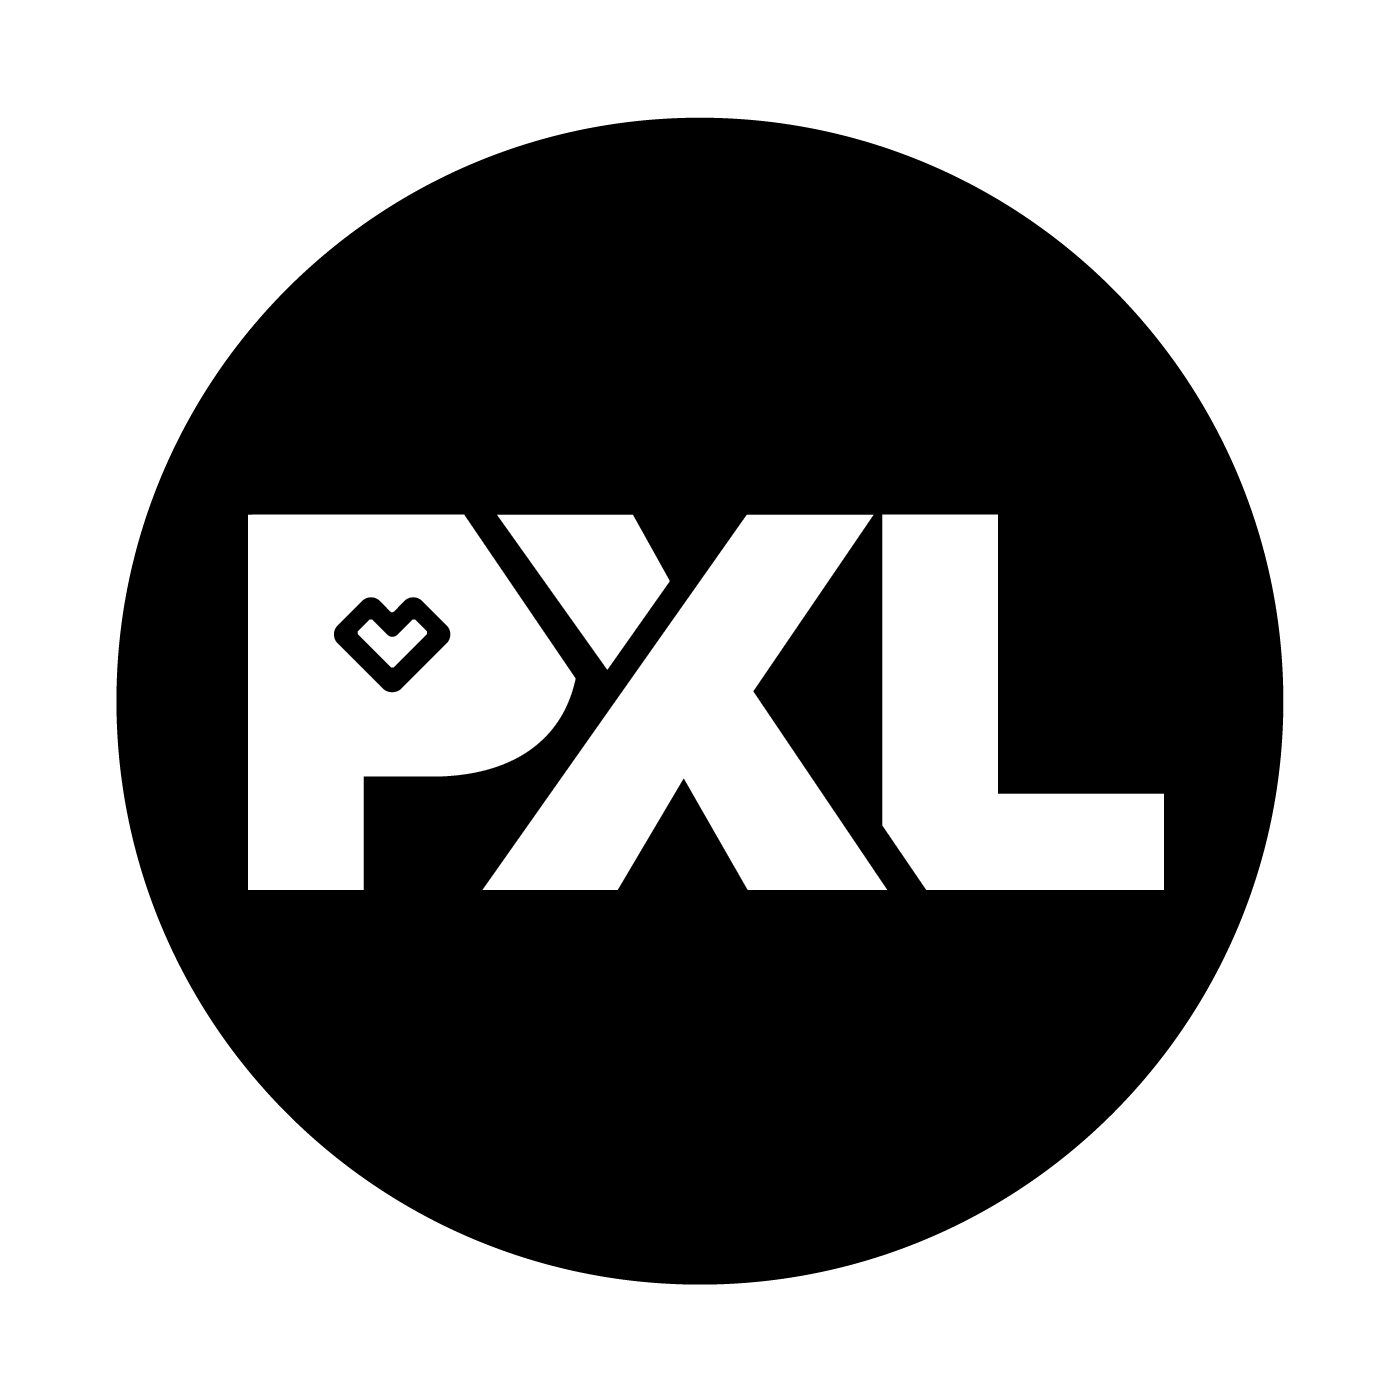 Pxl-logo.png